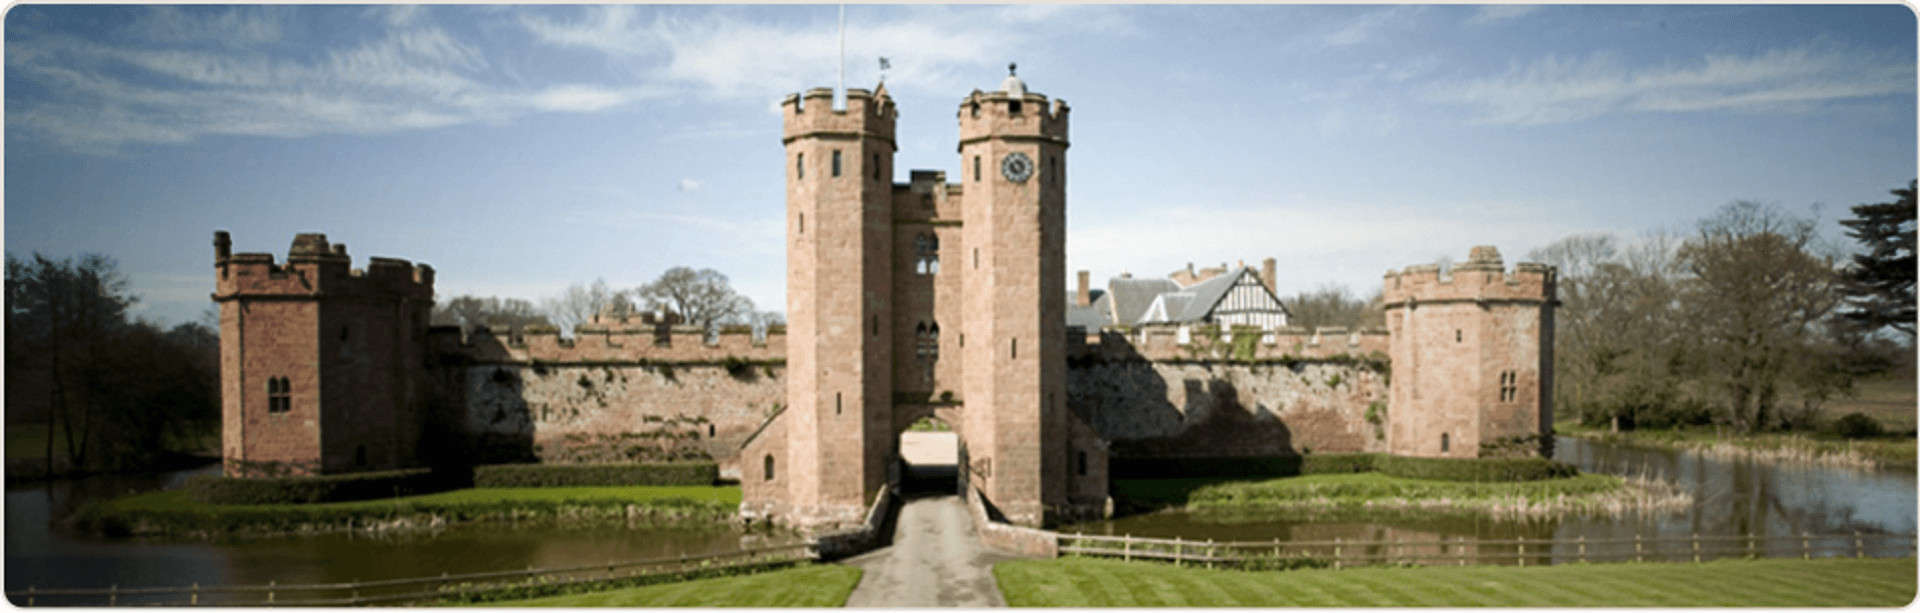 Maxstoke Castle in UK